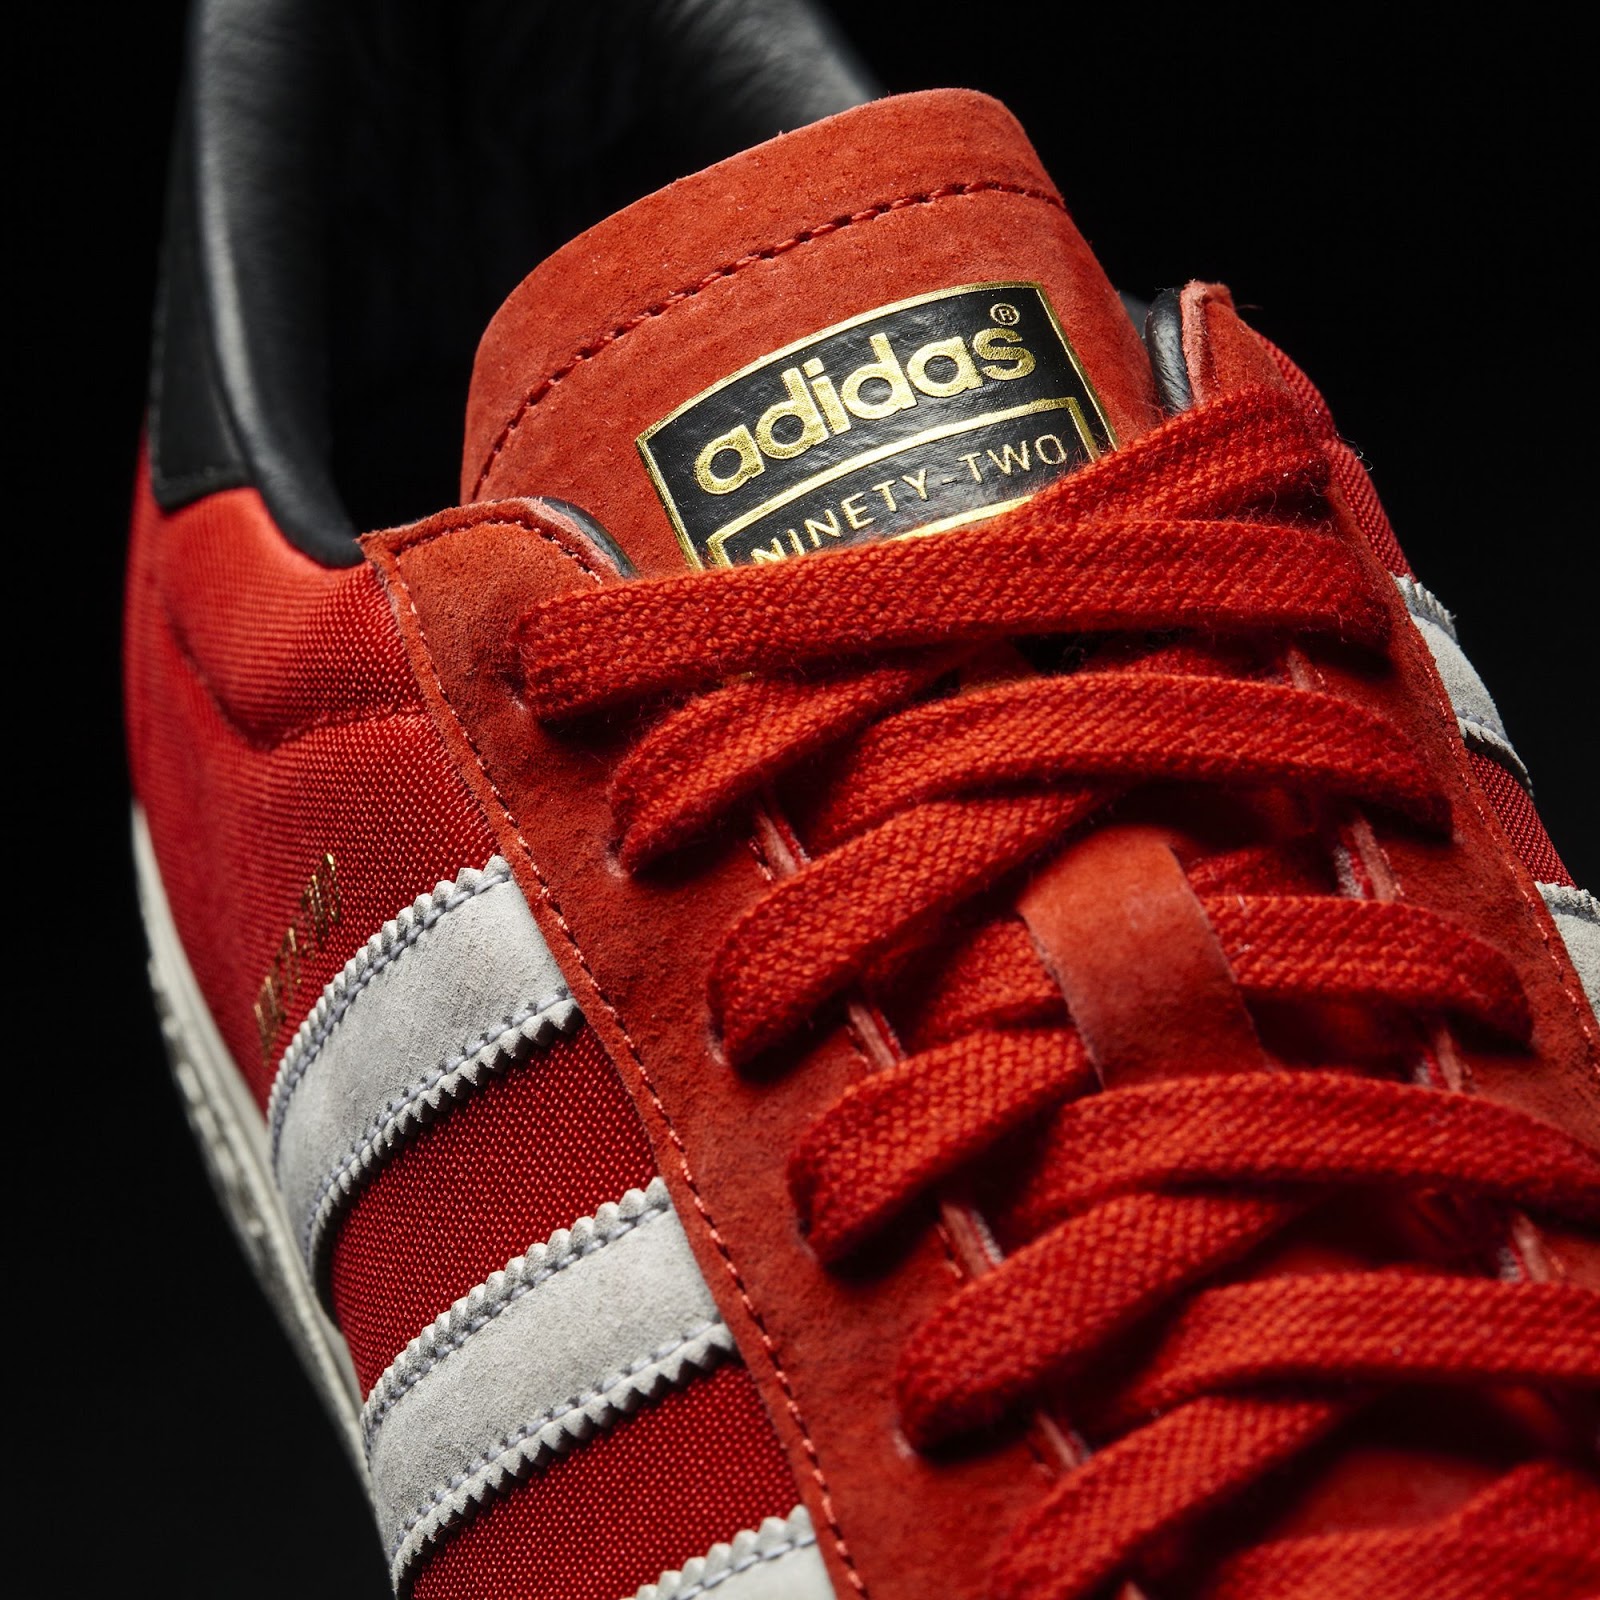 Classy Limited-Edition Adidas Man Utd Ninety-Two Shoe Revealed - Footy ...